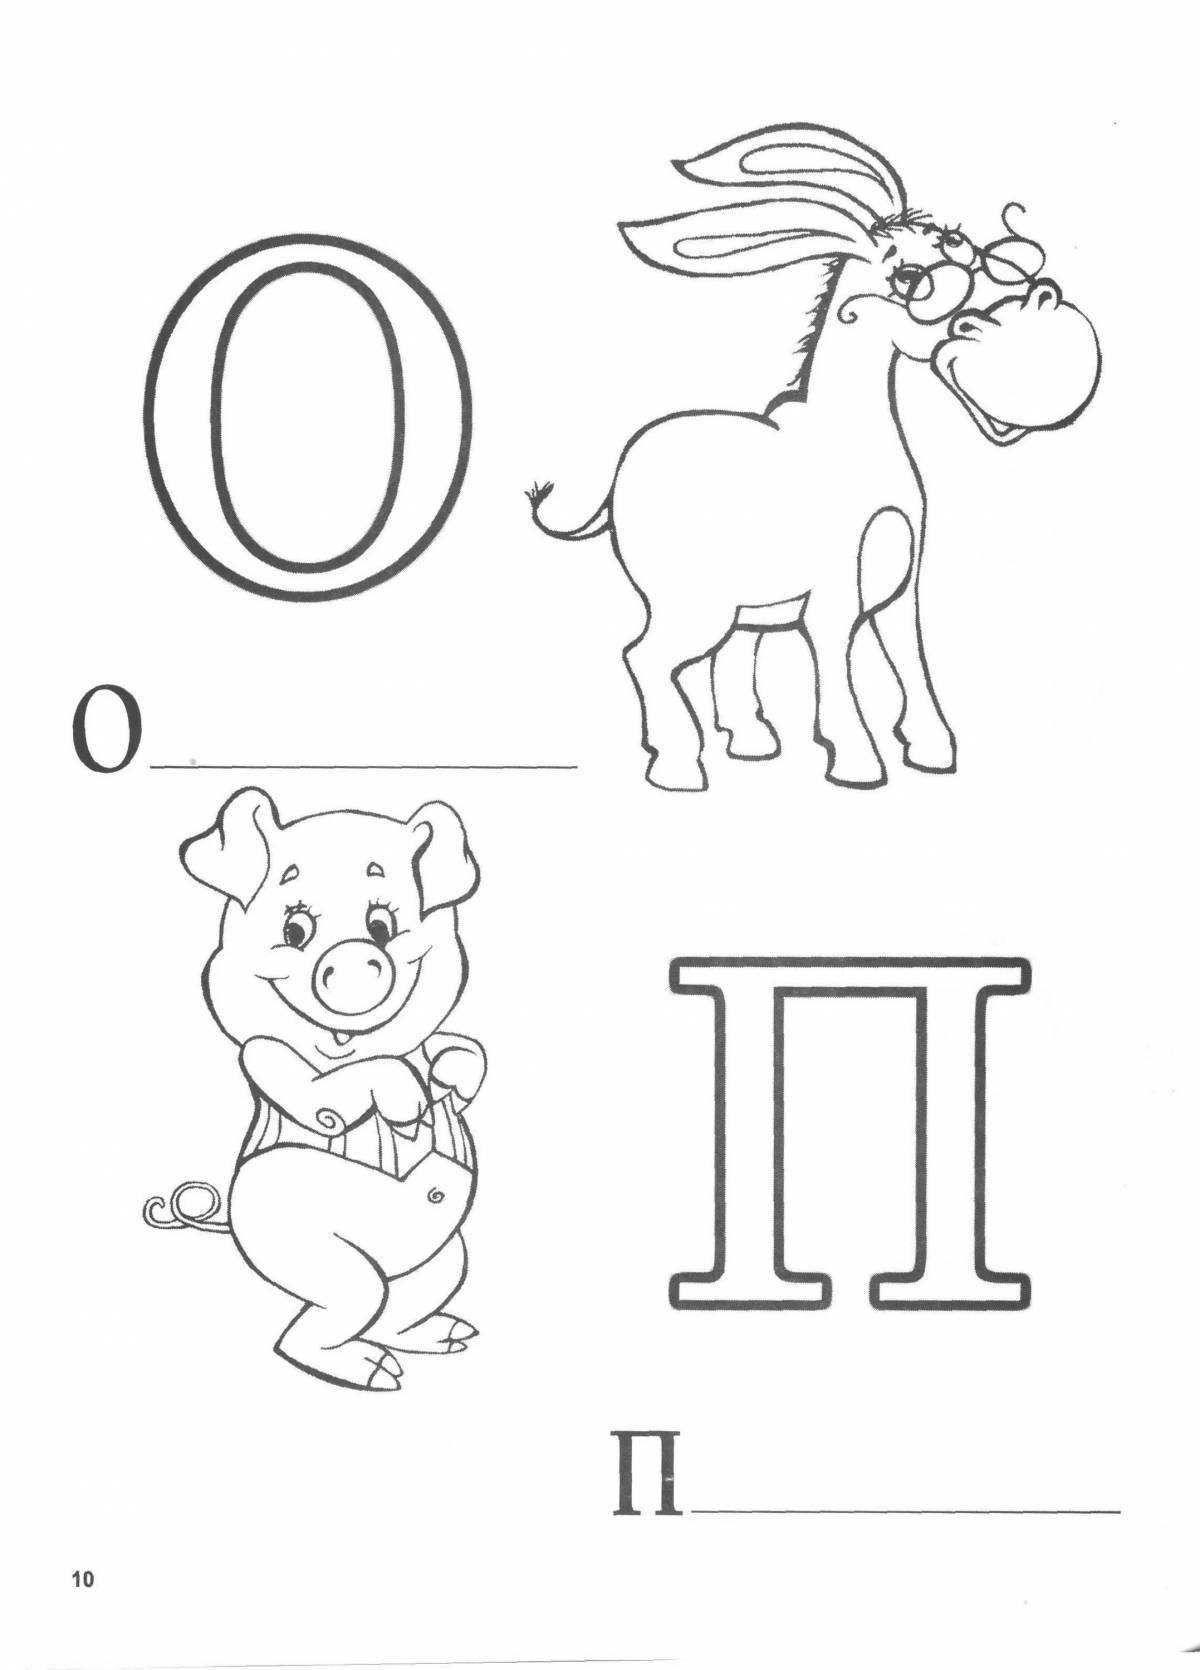 A fun coloring book with the alphabet